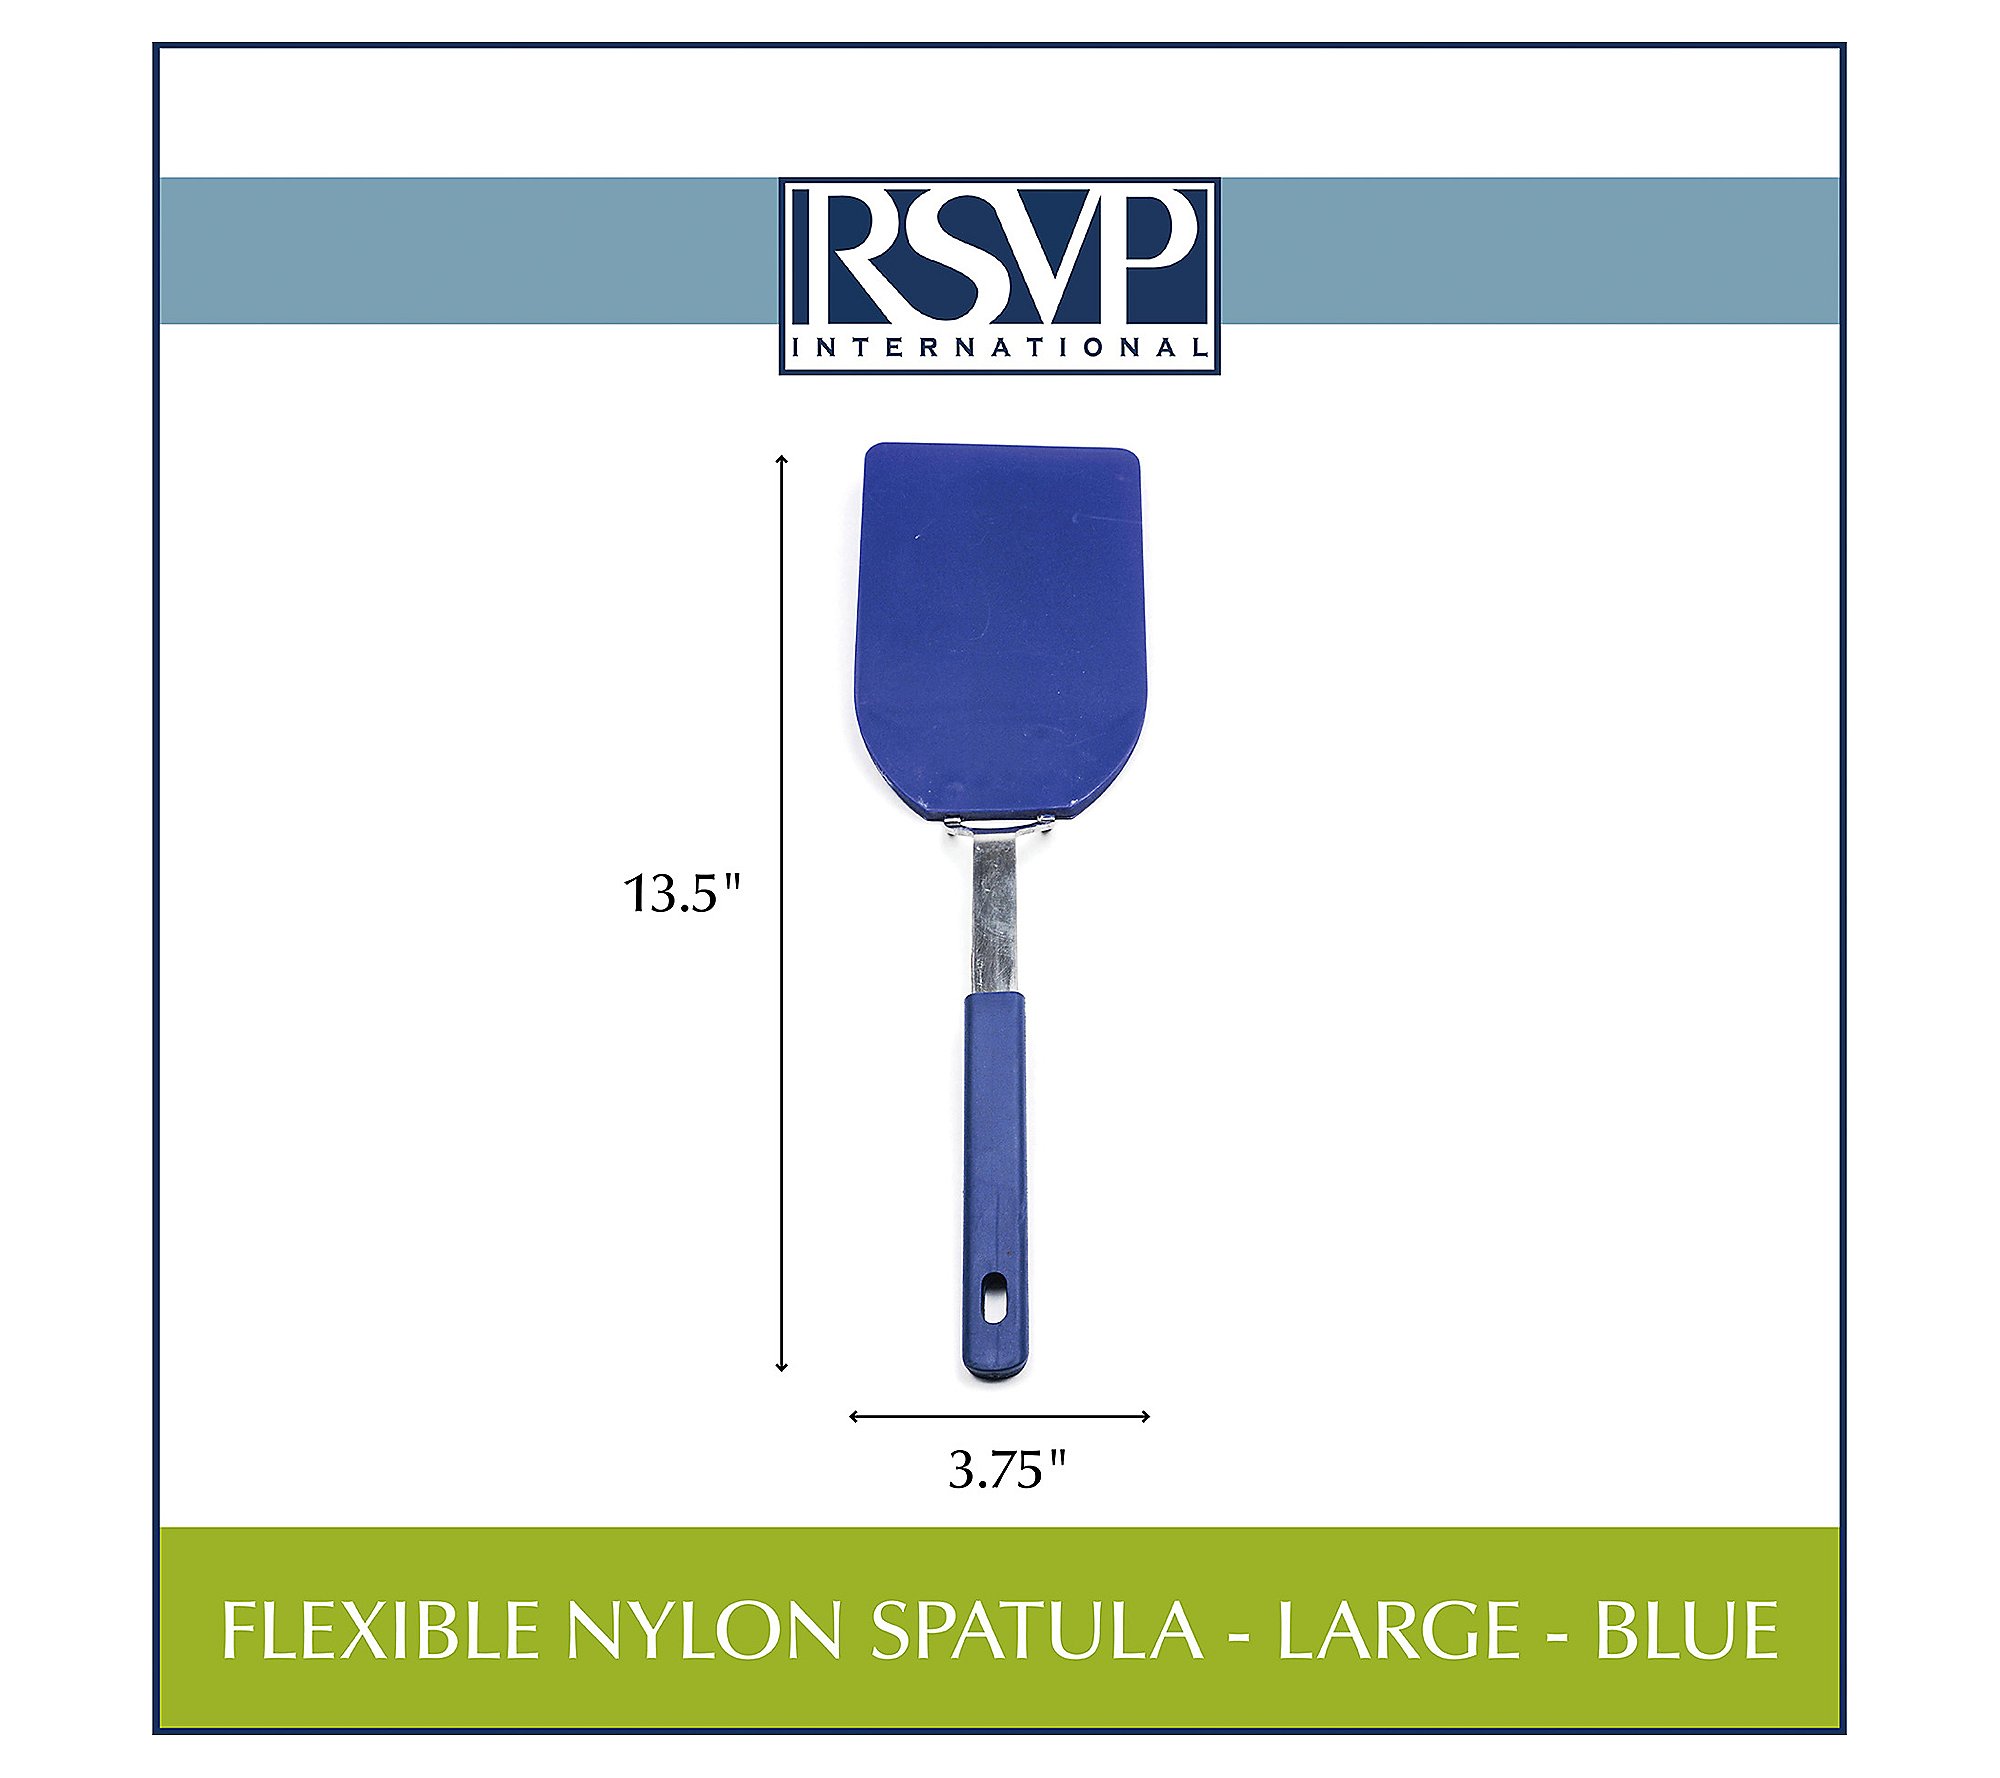 RSVP Flexible Nylon Spatula Large